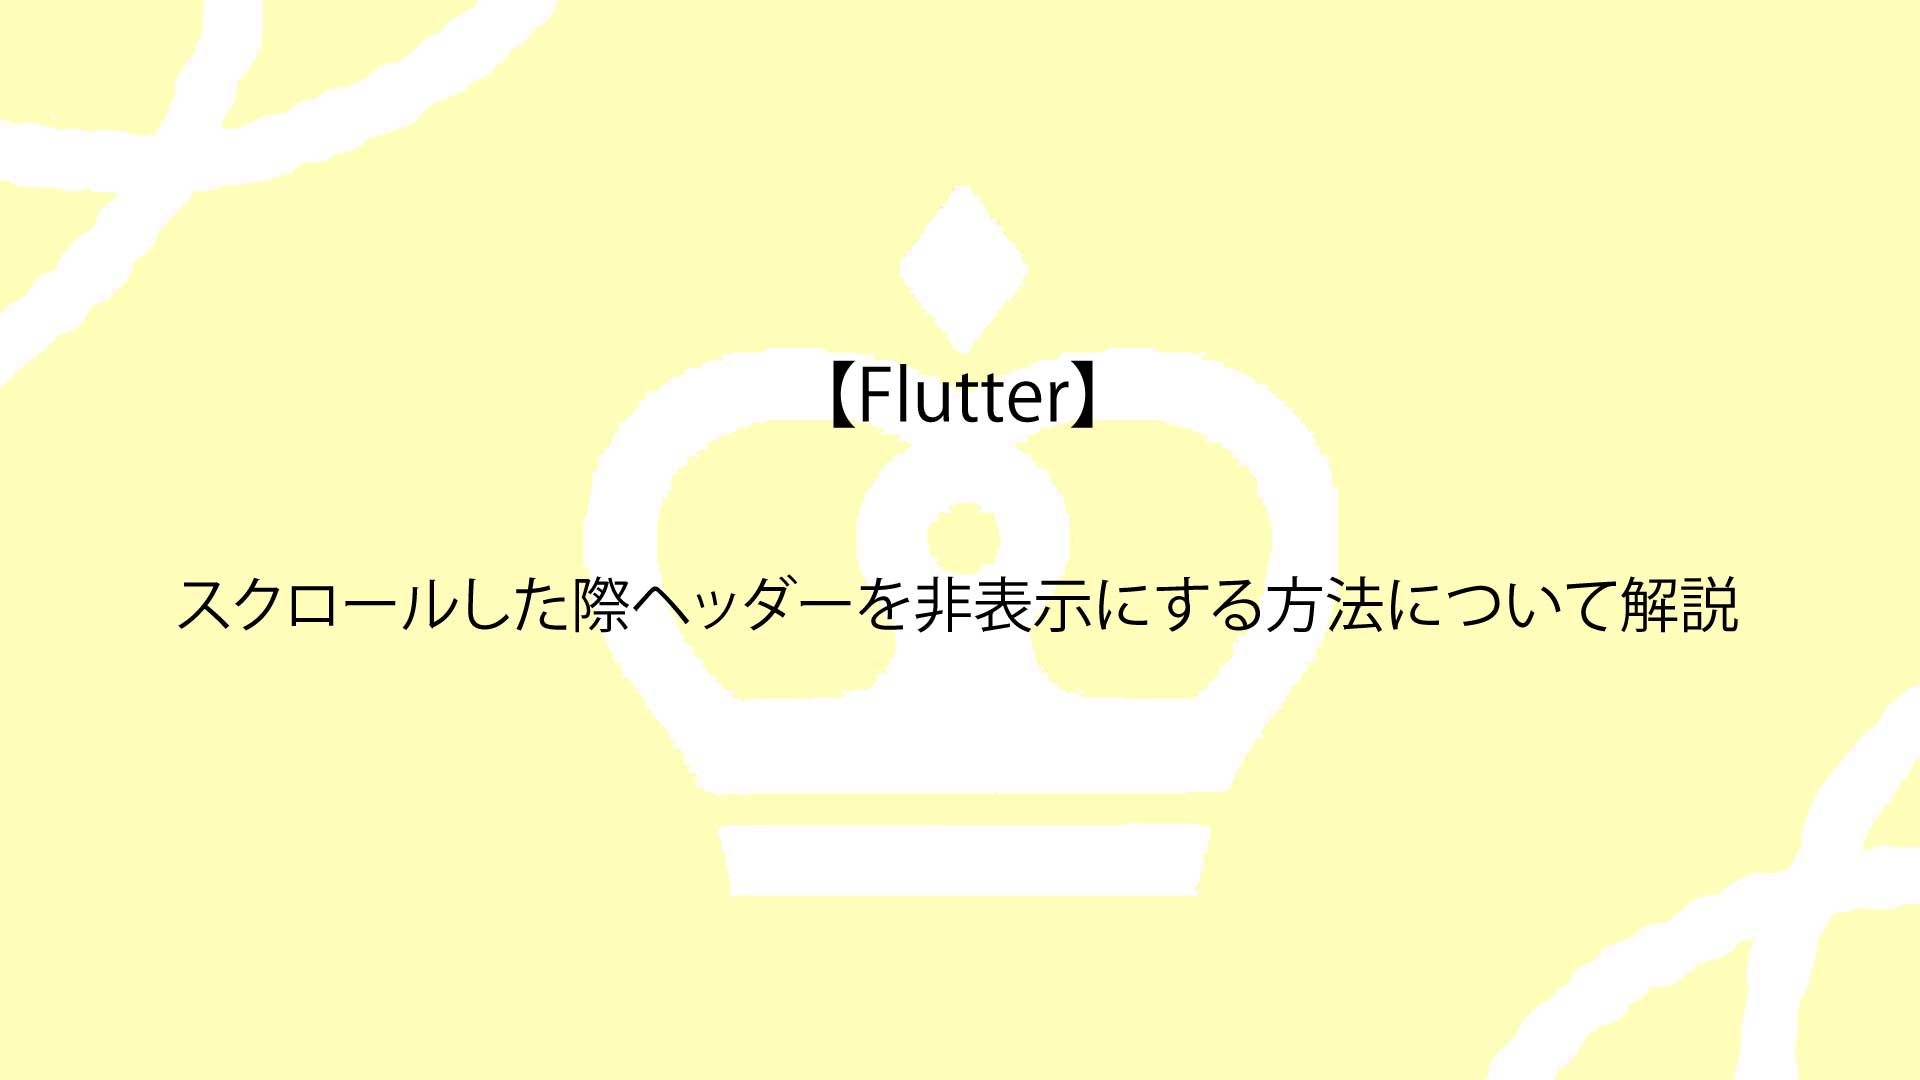 【Flutter】スクロールした際ヘッダーを非表示にする方法について解説